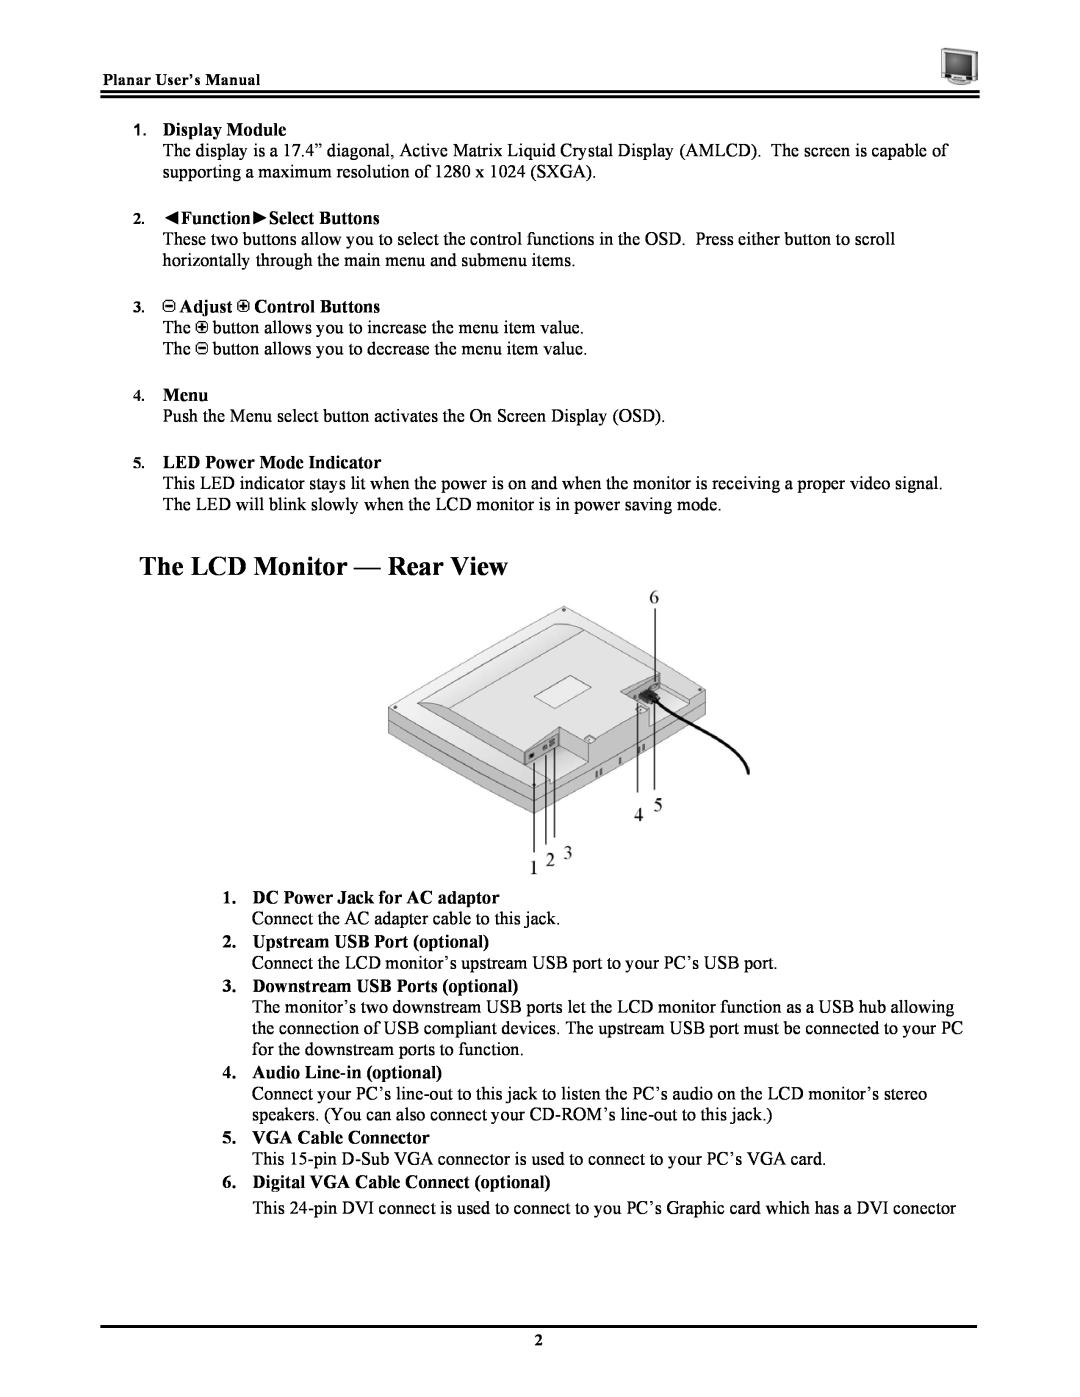 Planar CT1744NU manual The LCD Monitor - Rear View 